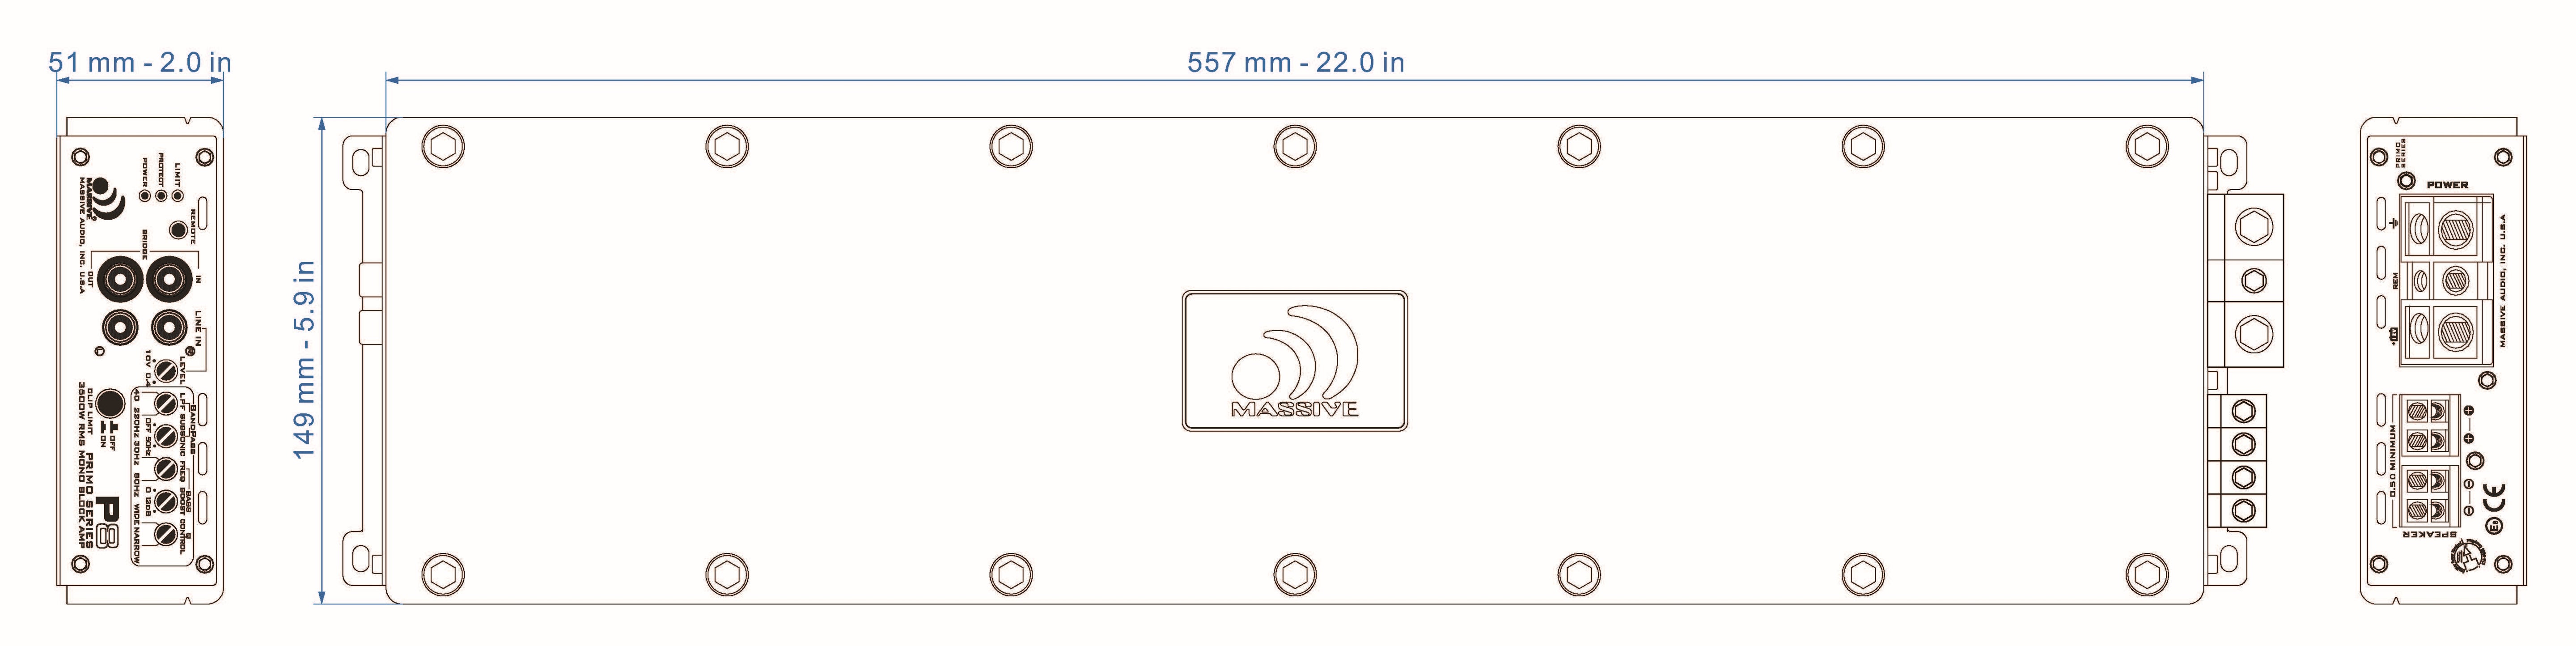 P8 - 3,500 Watts RMS @ 0.5 Ohm Mono Mega Amplifier